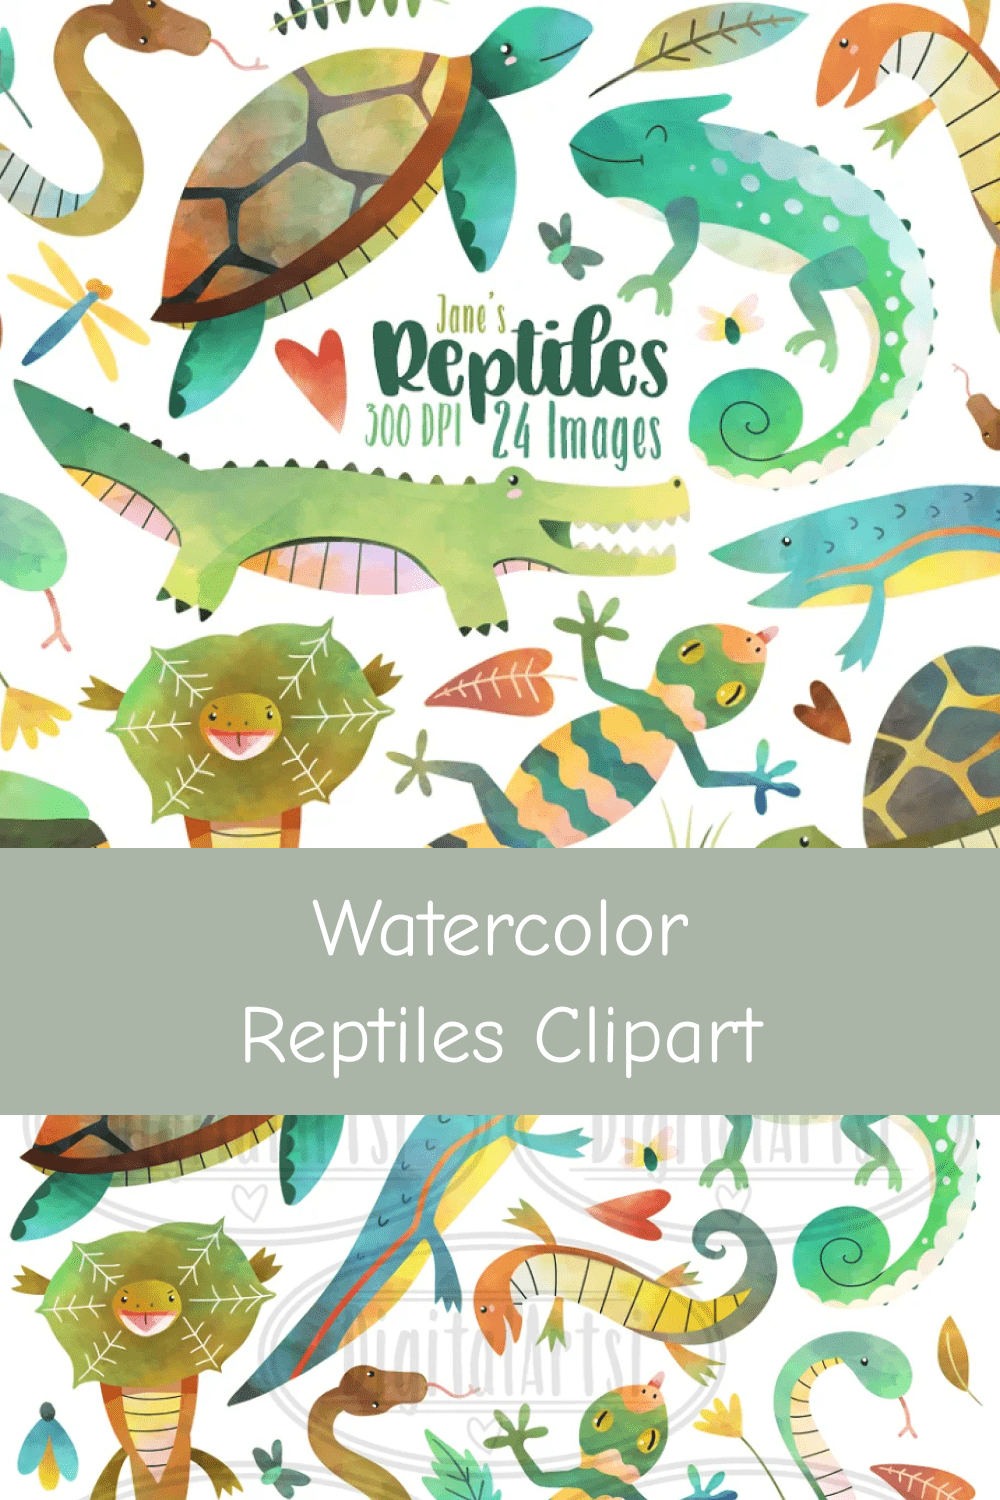 Watercolor Reptiles Clipart.